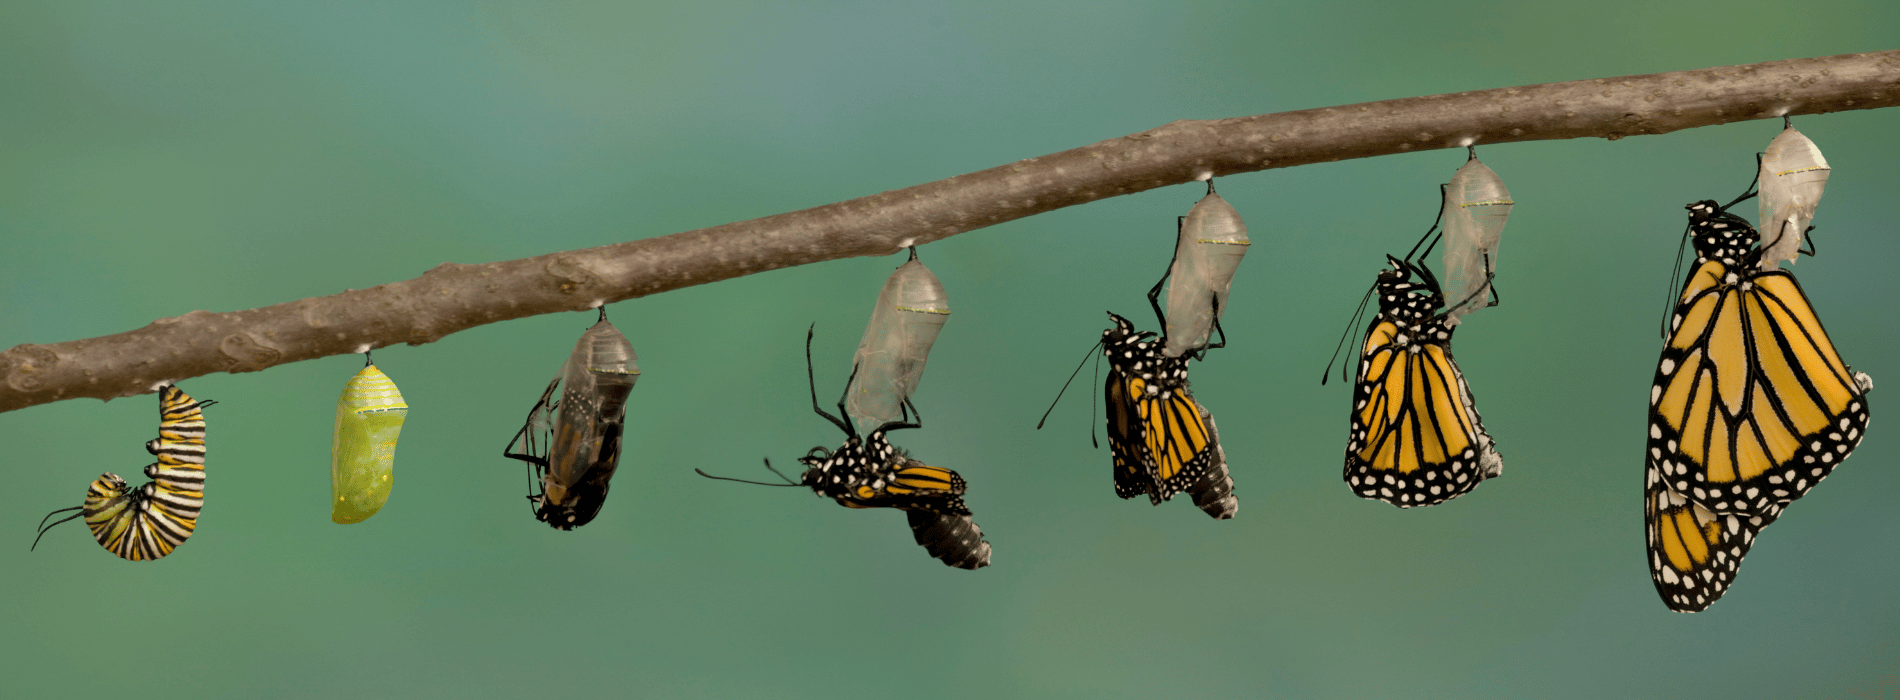 Lebenszyklus eines Schmetterlings